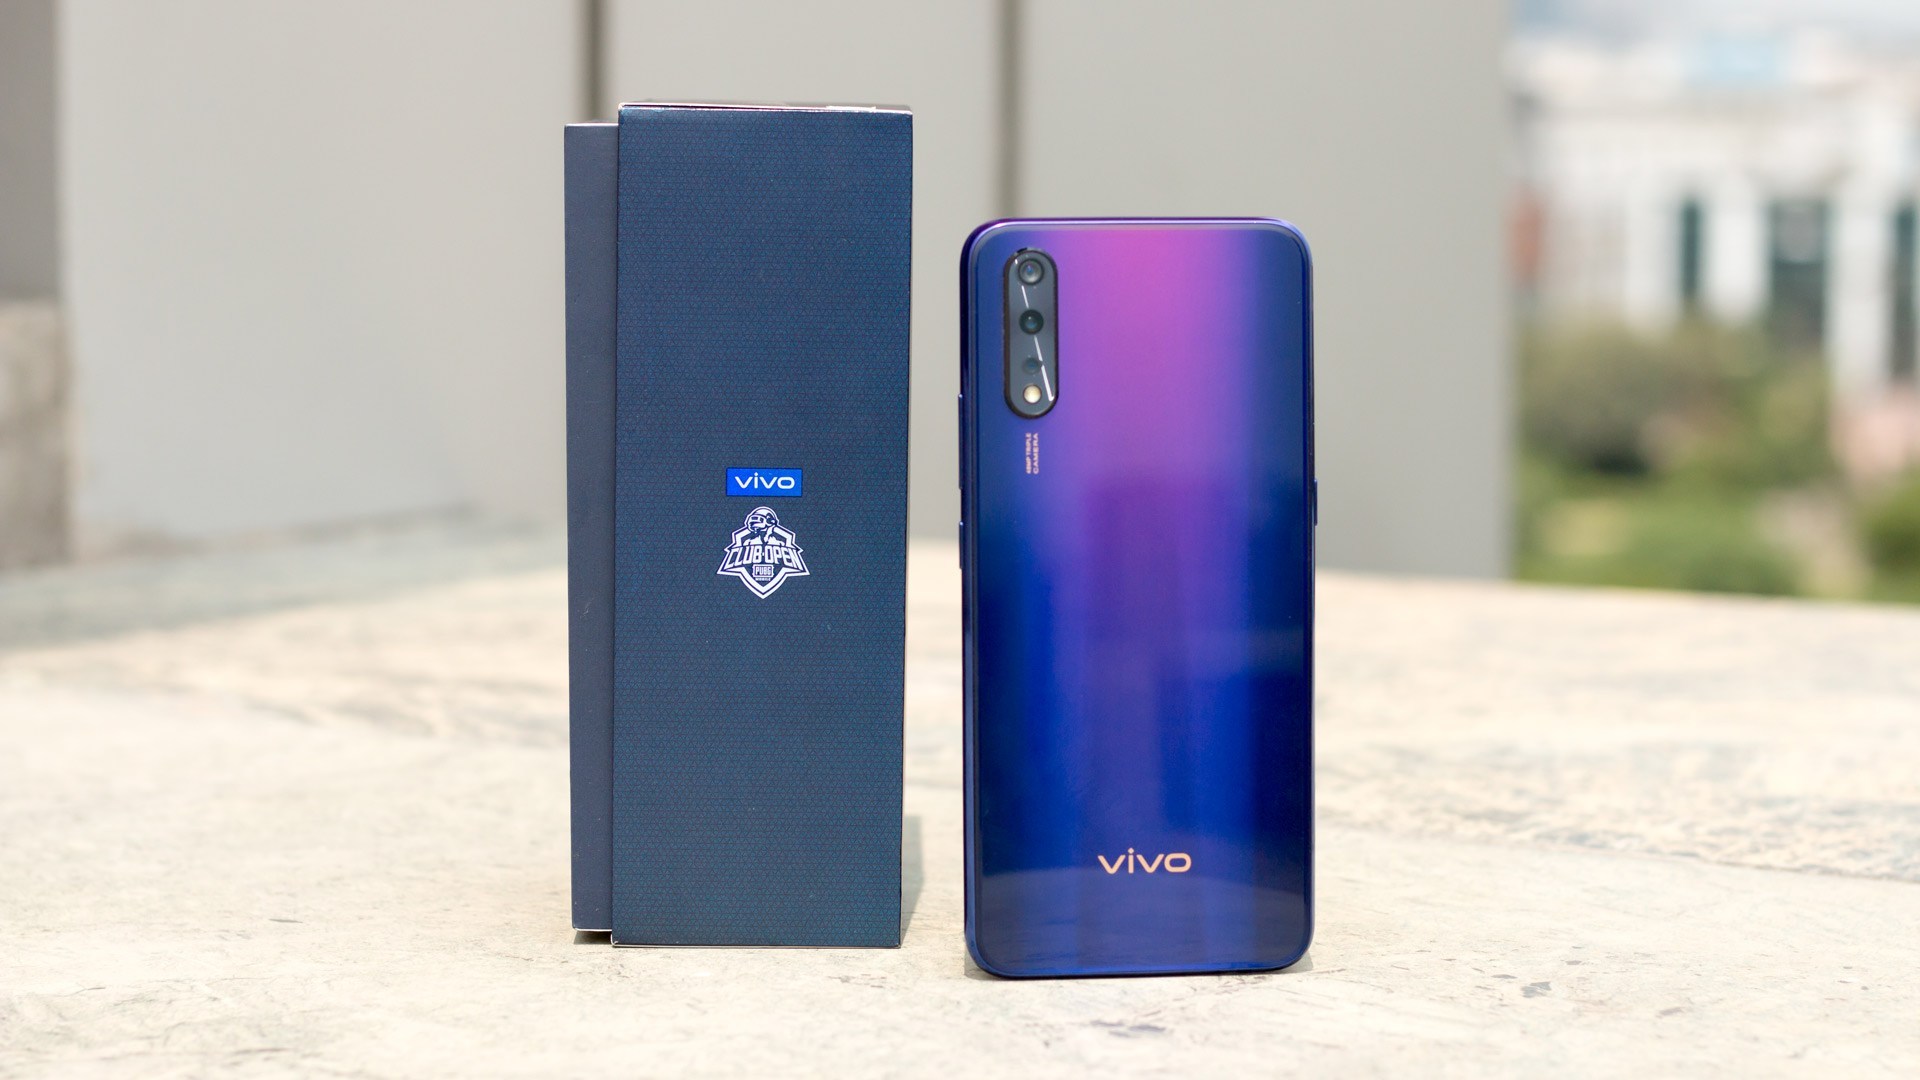 Vivo Обзор Z1x: на данный момент лучший Vivo телефон под рупий 20000